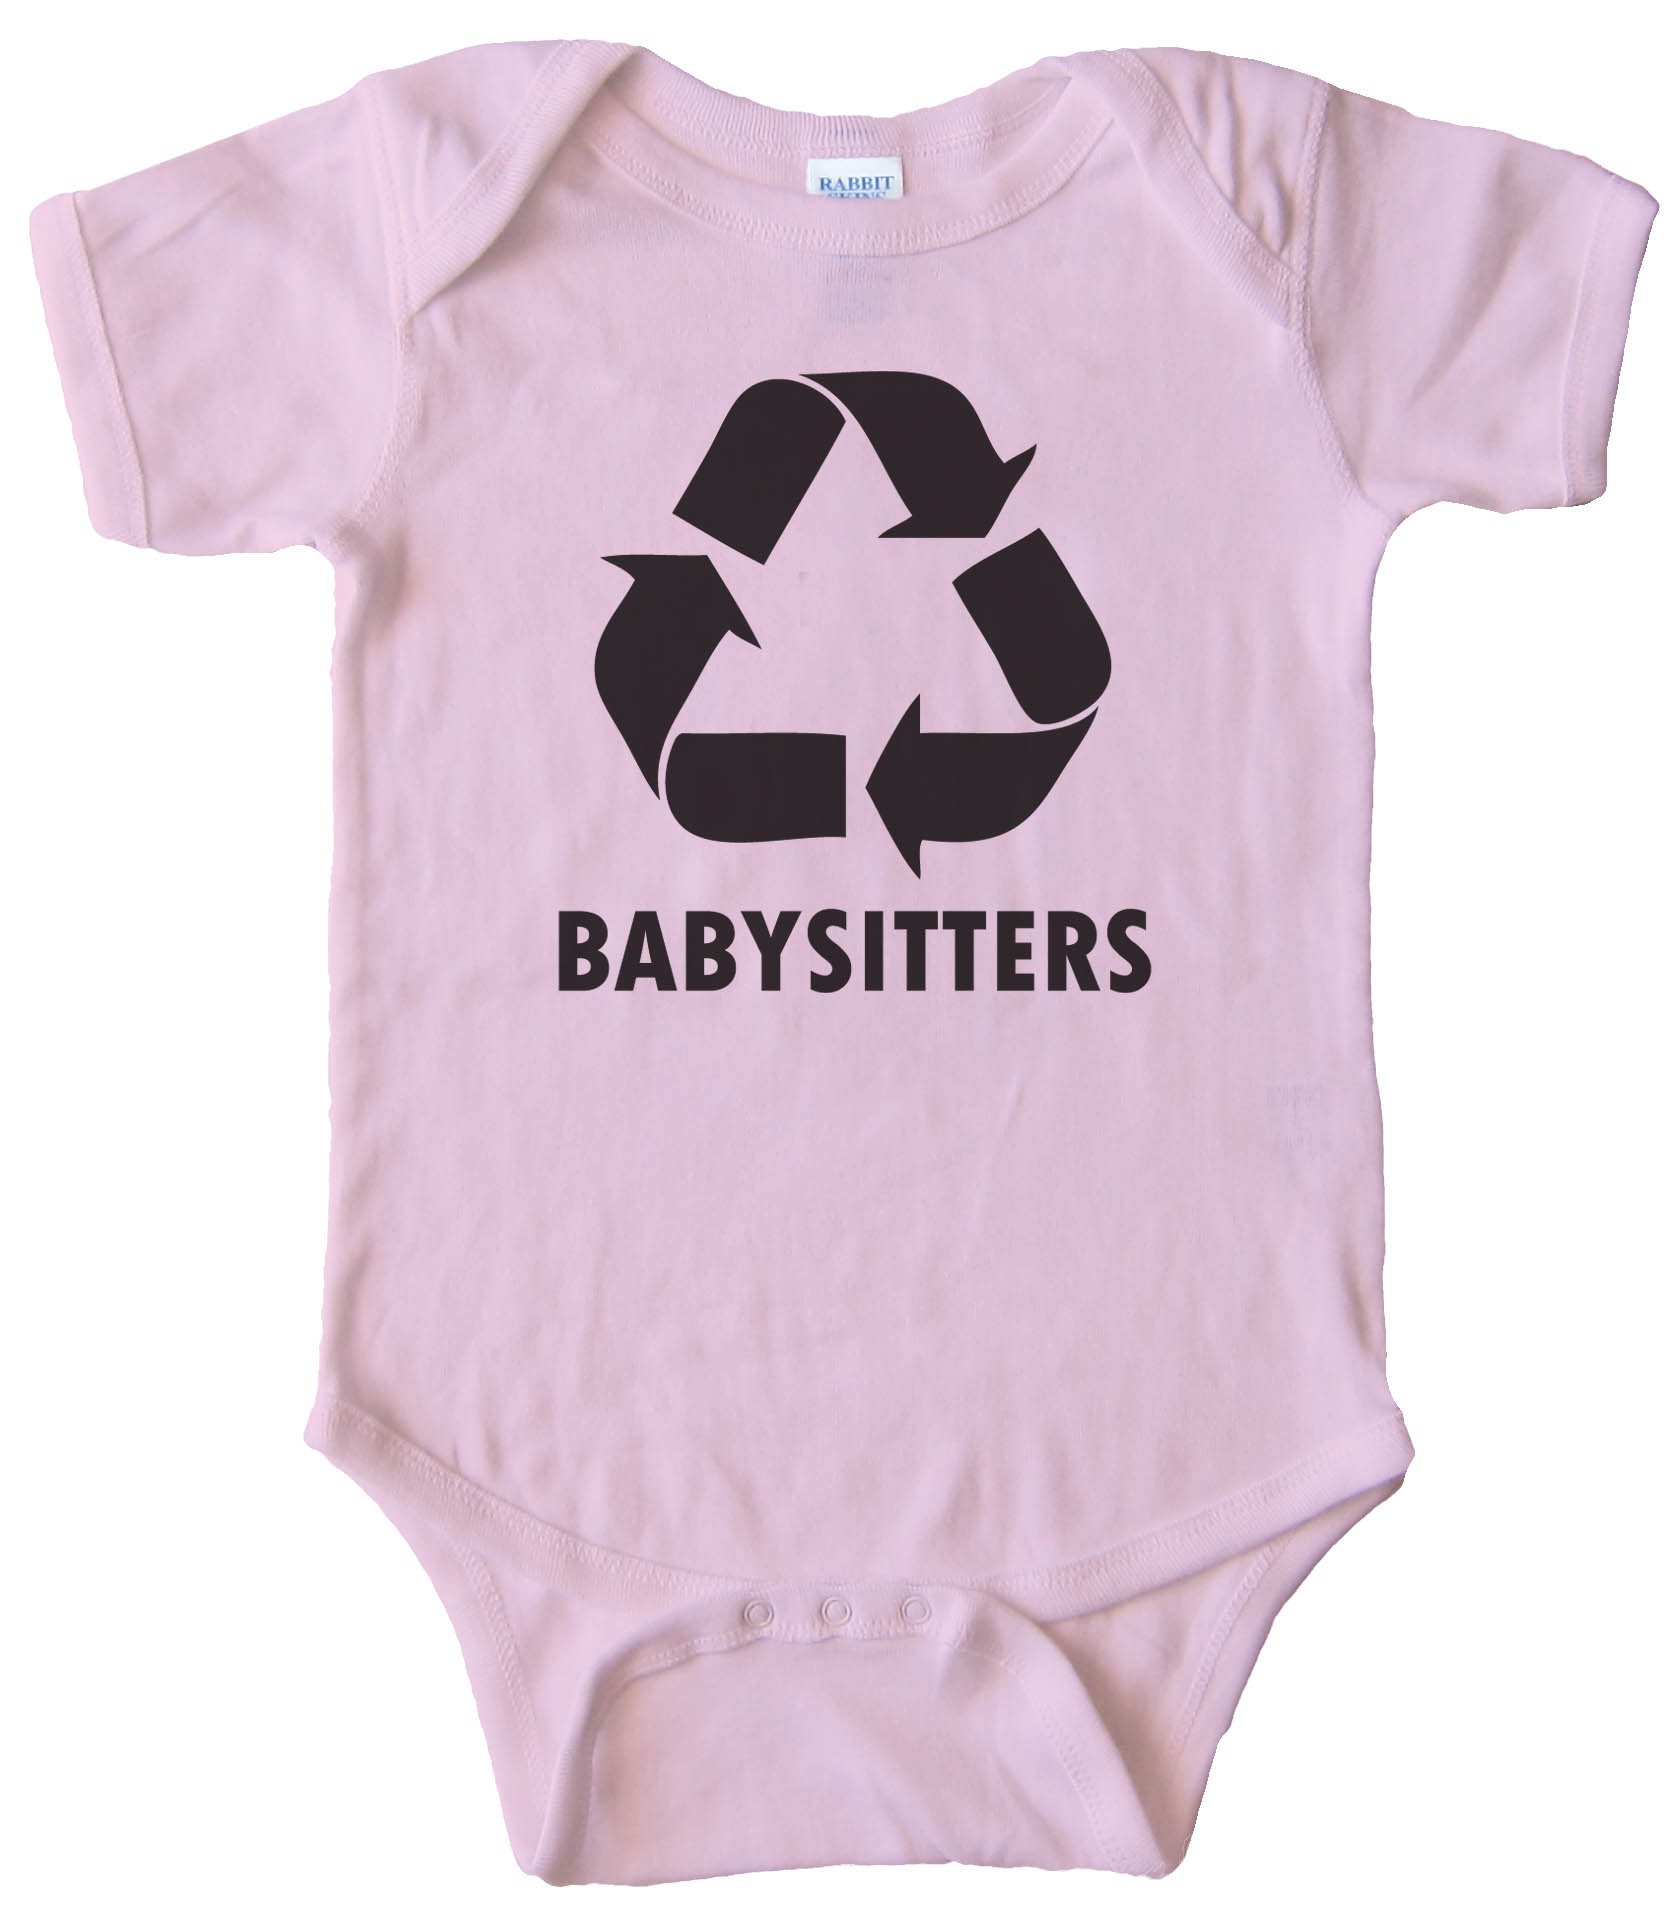 Recycle Babysitters - Baby Bodysuit